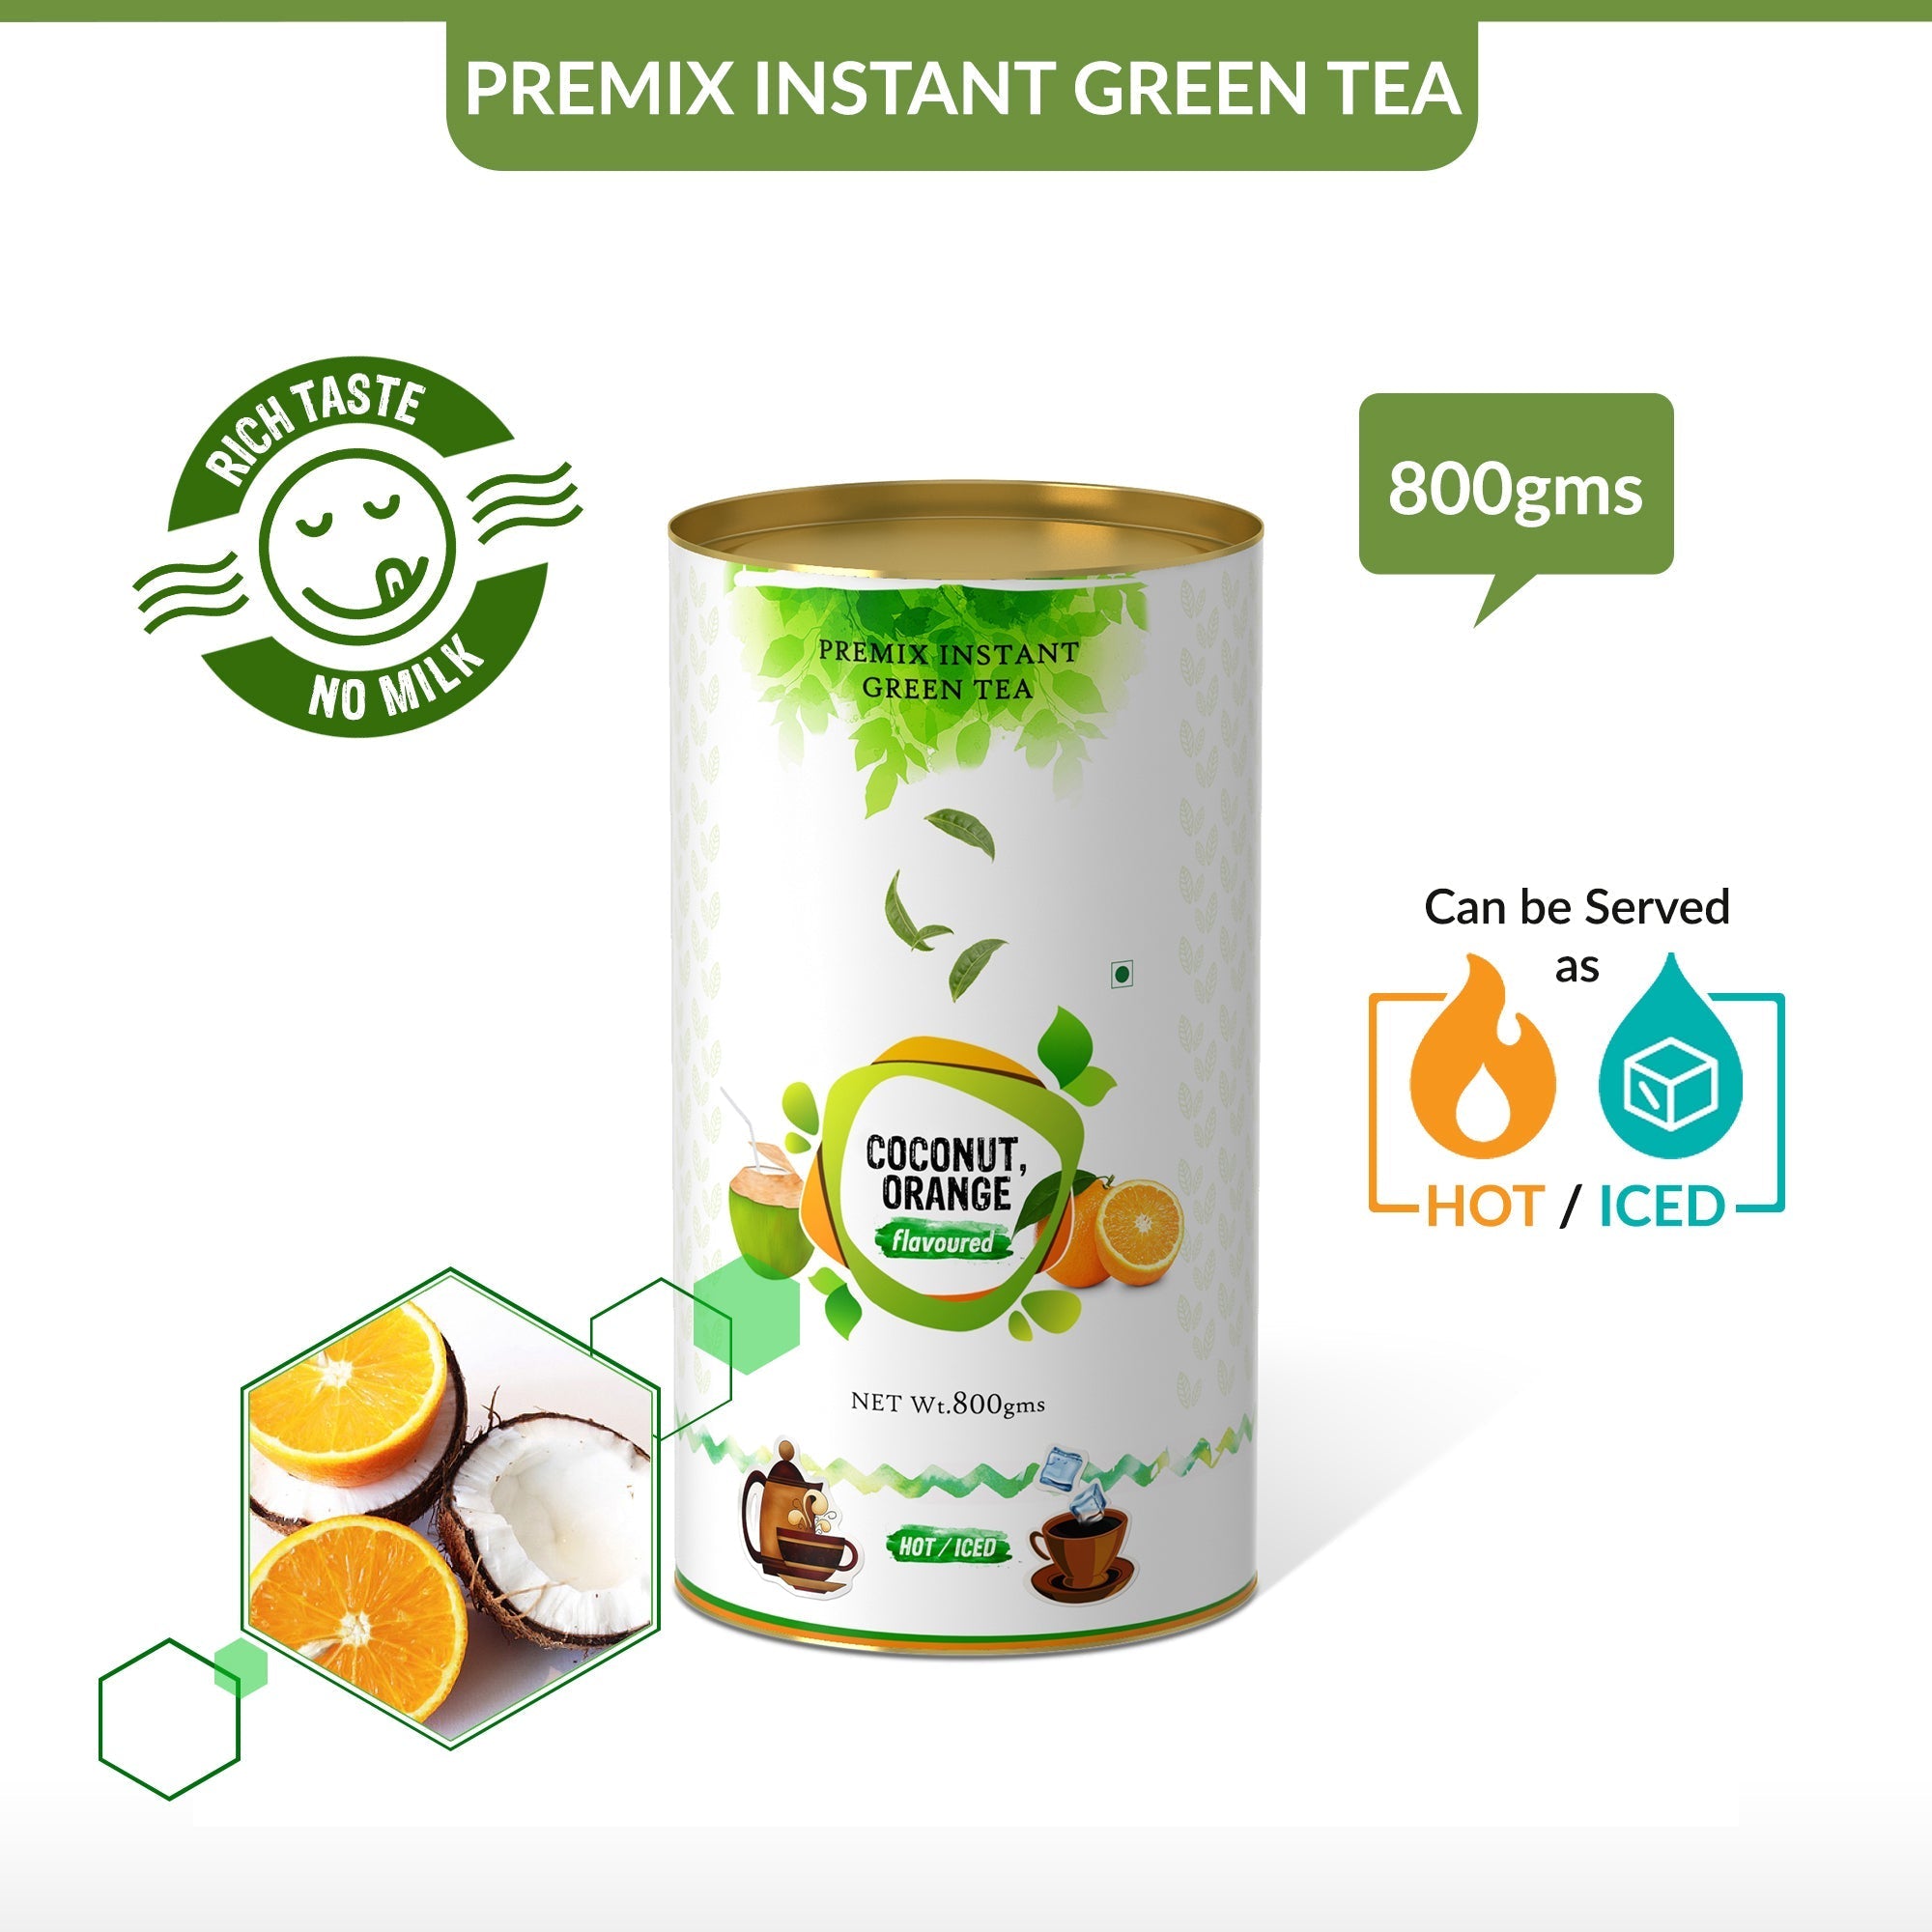 Cococnut Orange Flavored Instant Green Tea - 800 gms